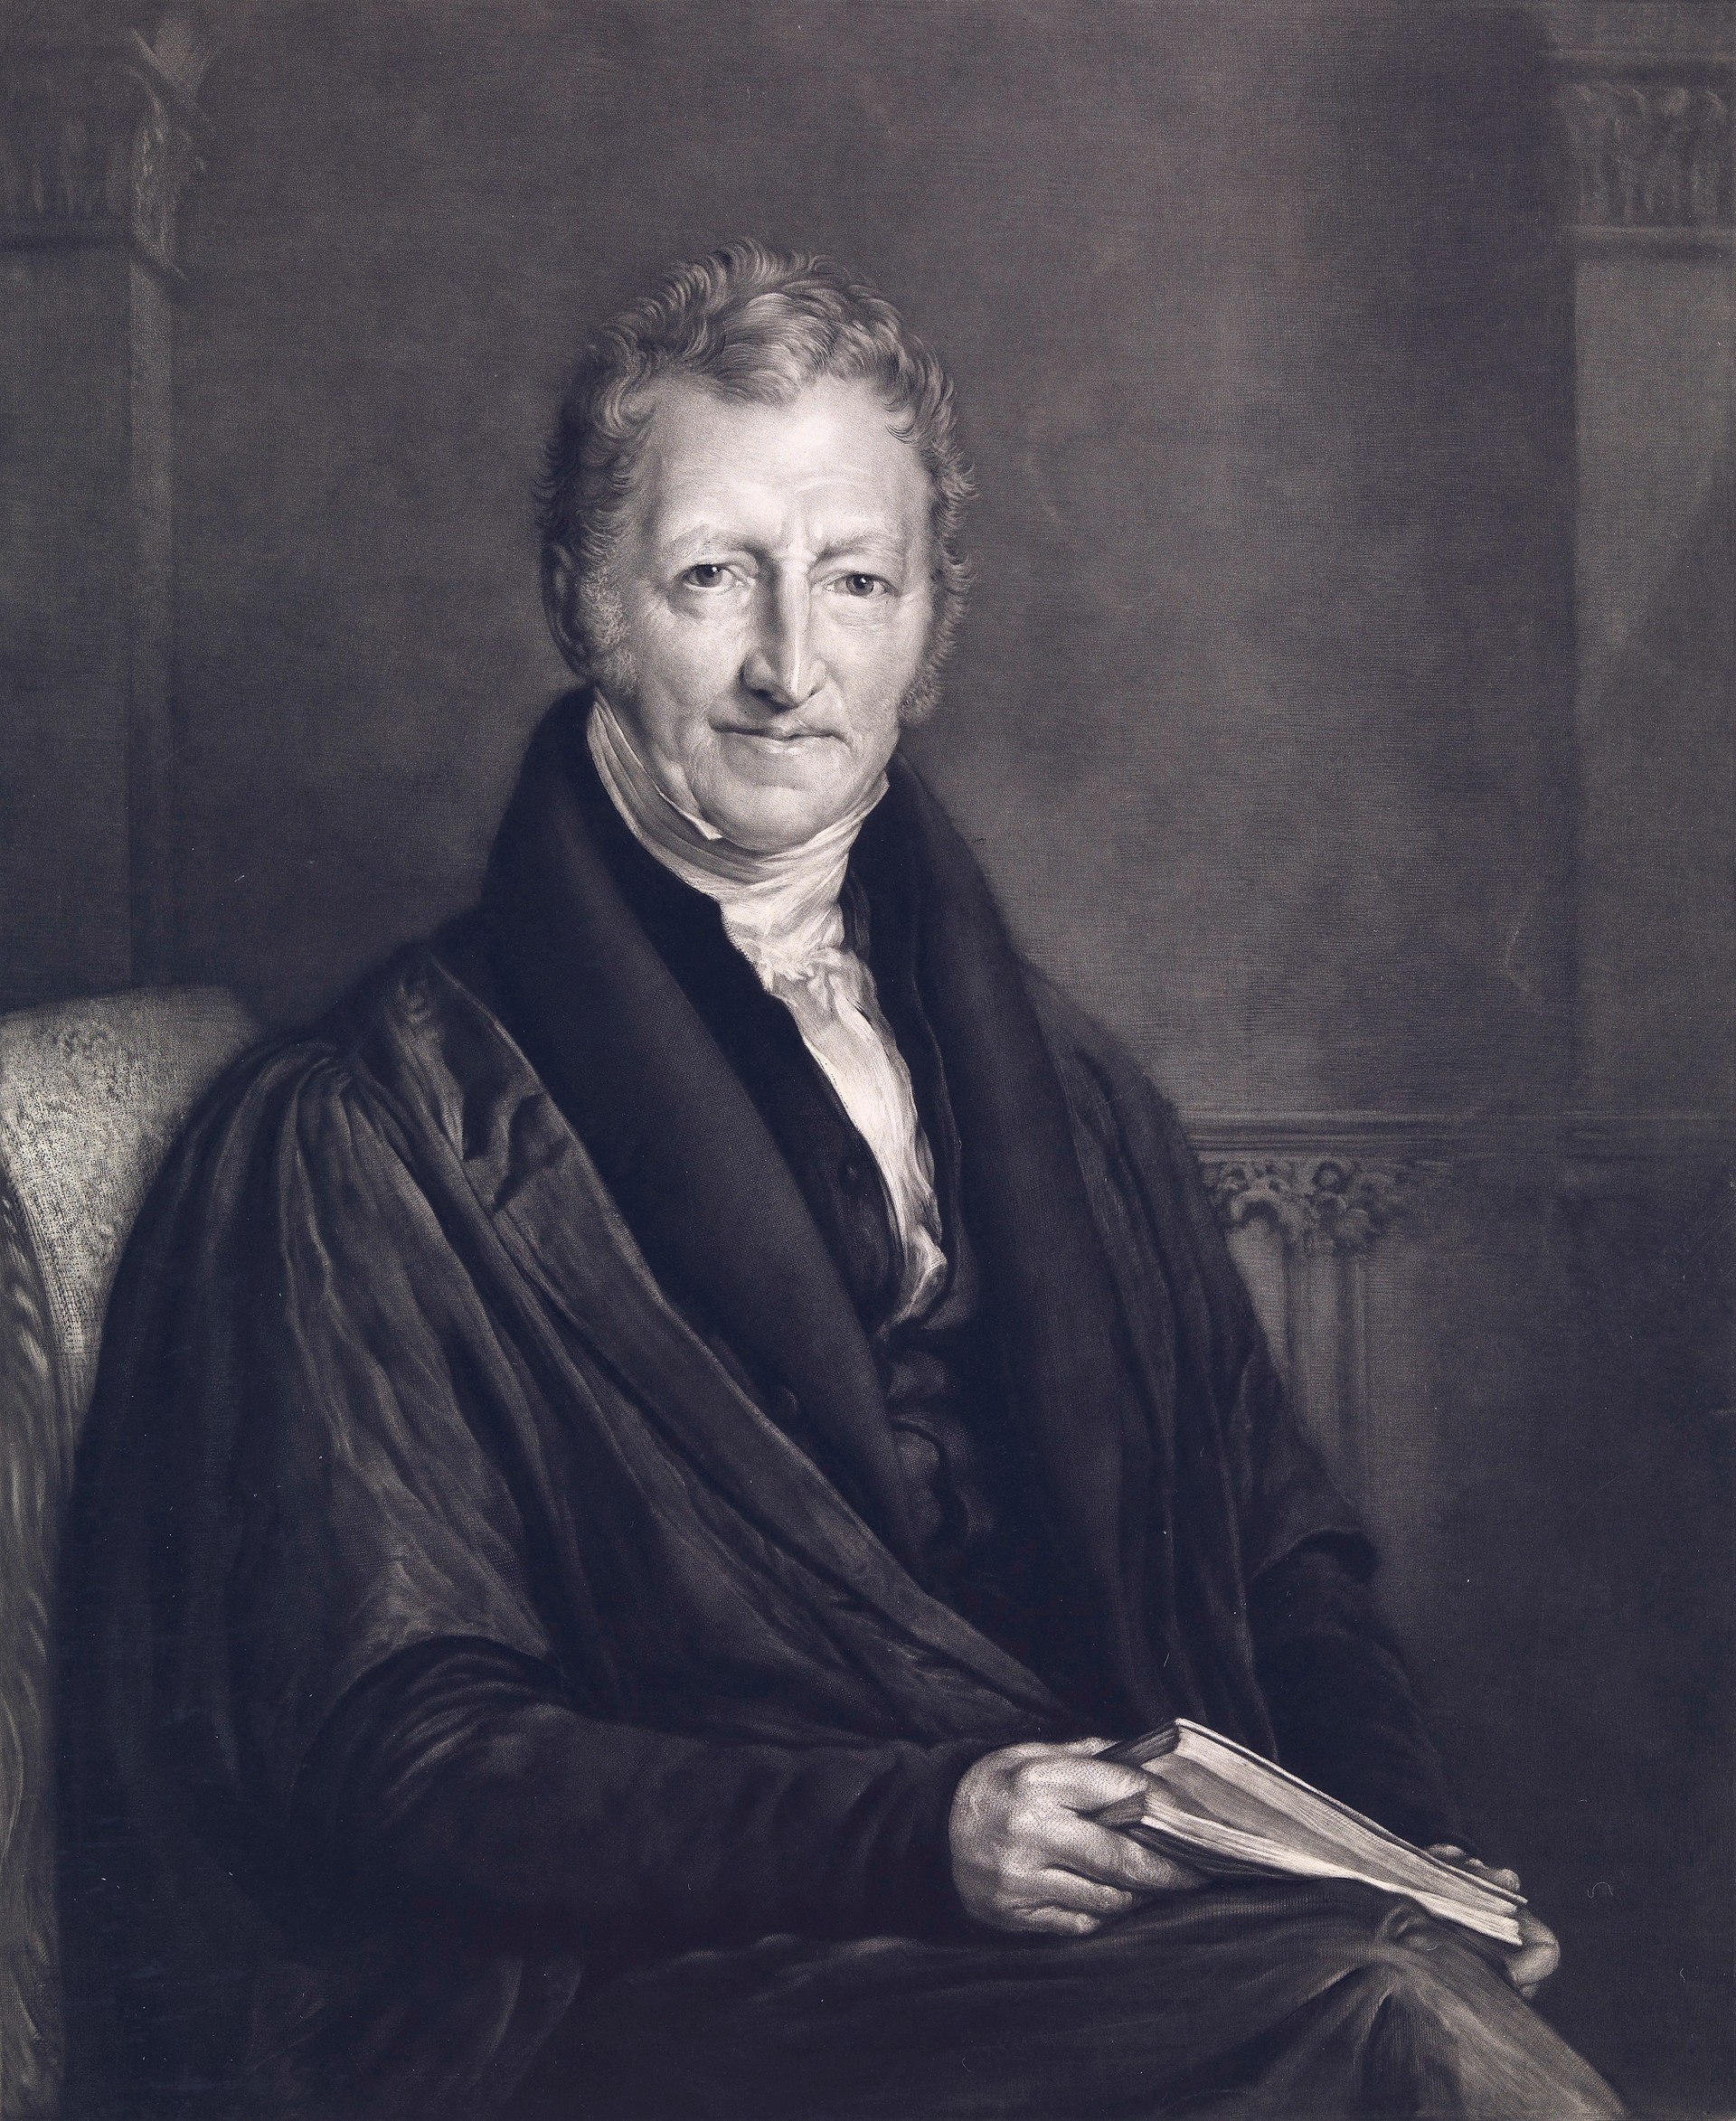 Portrait of Malthus